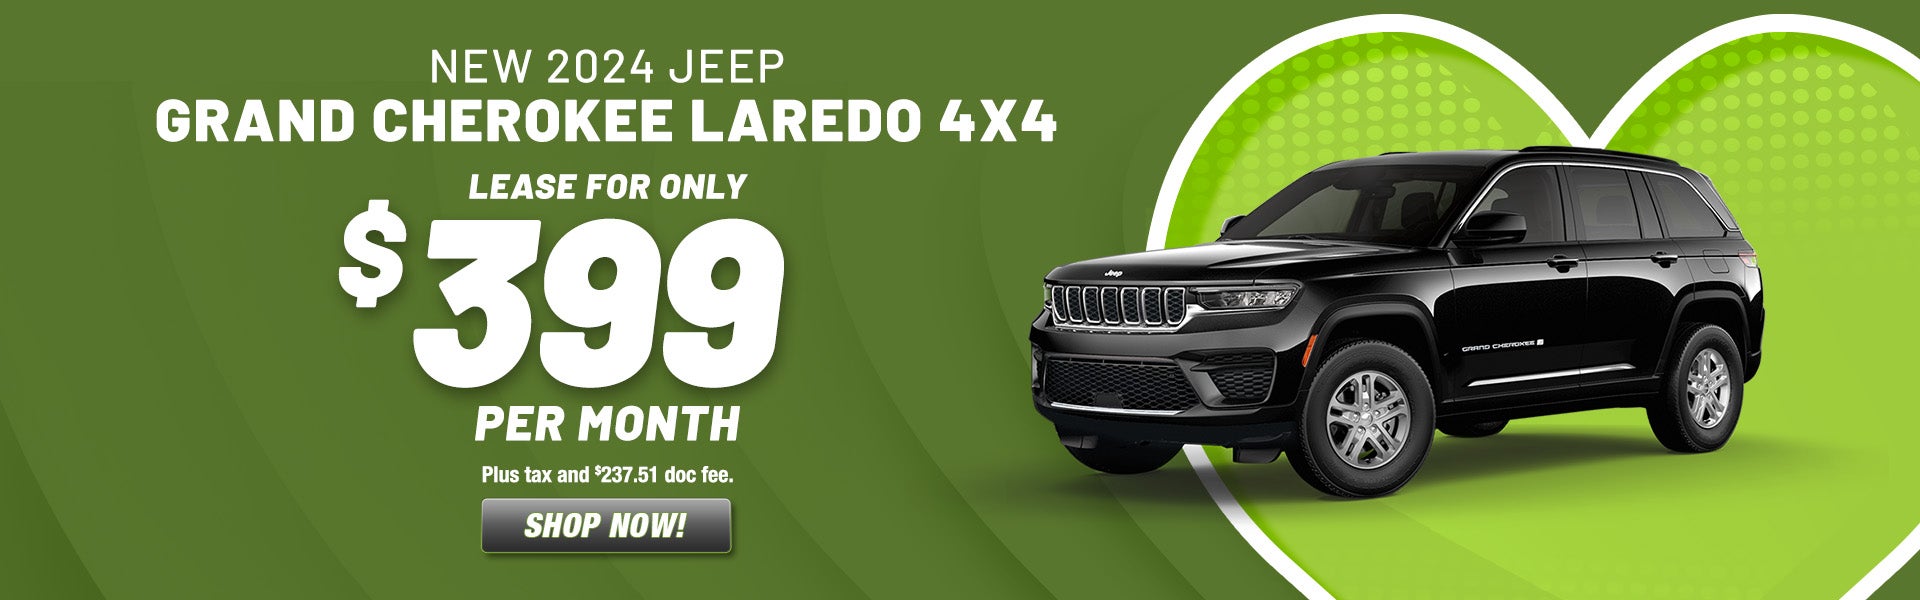 Jeep Grand Cherokee Laredo Lease